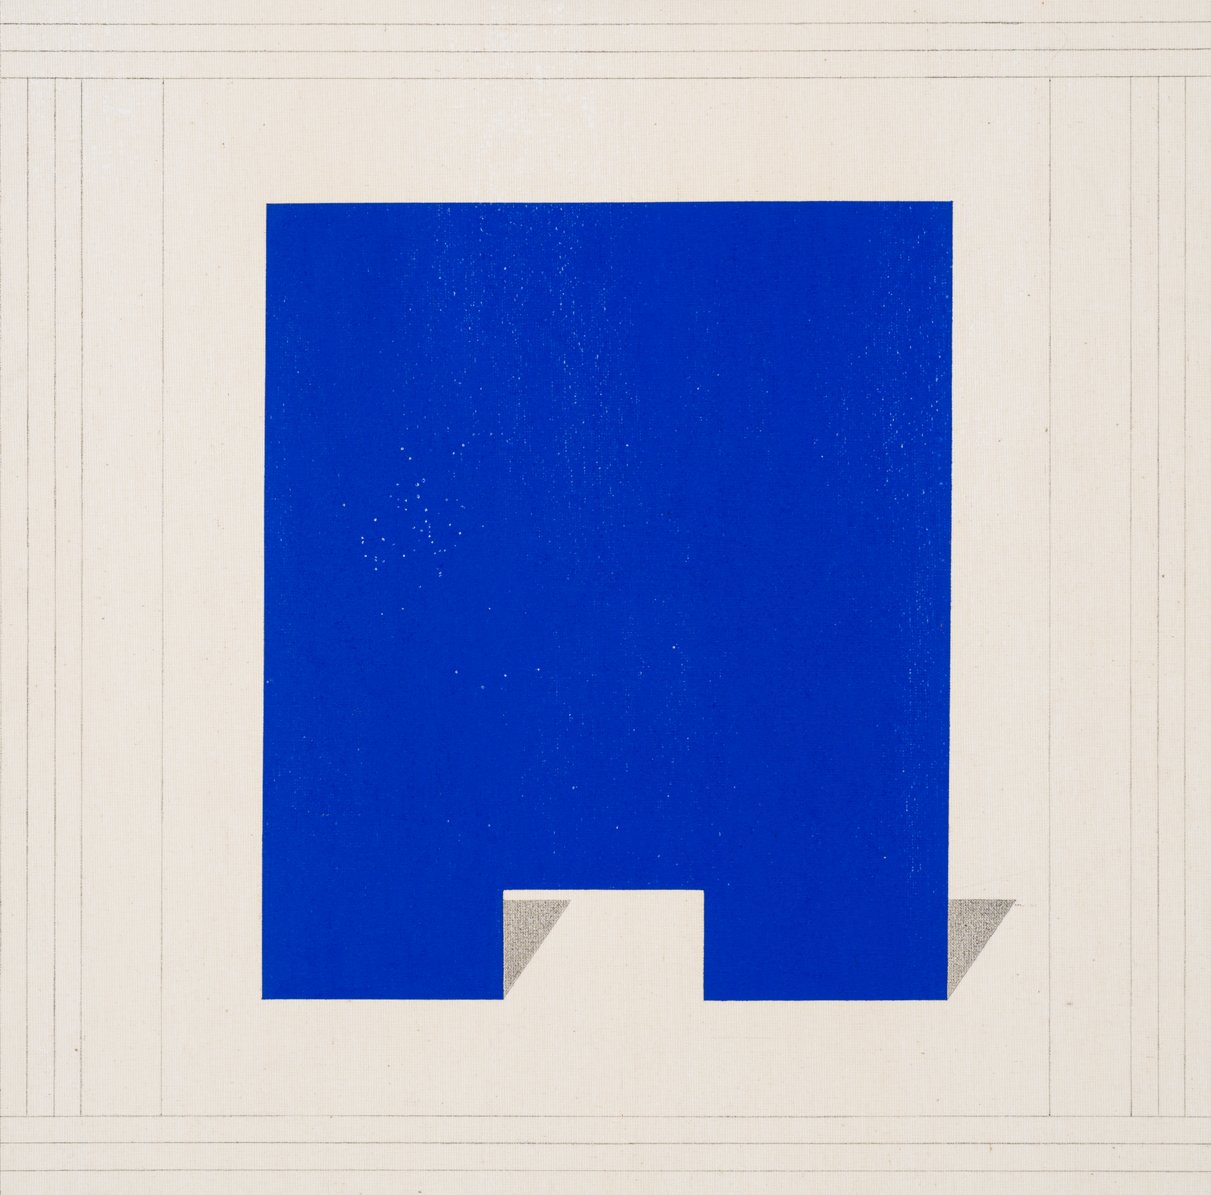   Blue bird behind blue polygon , 2021 / Oil, pencil, canvas / 45cm x 45cm 